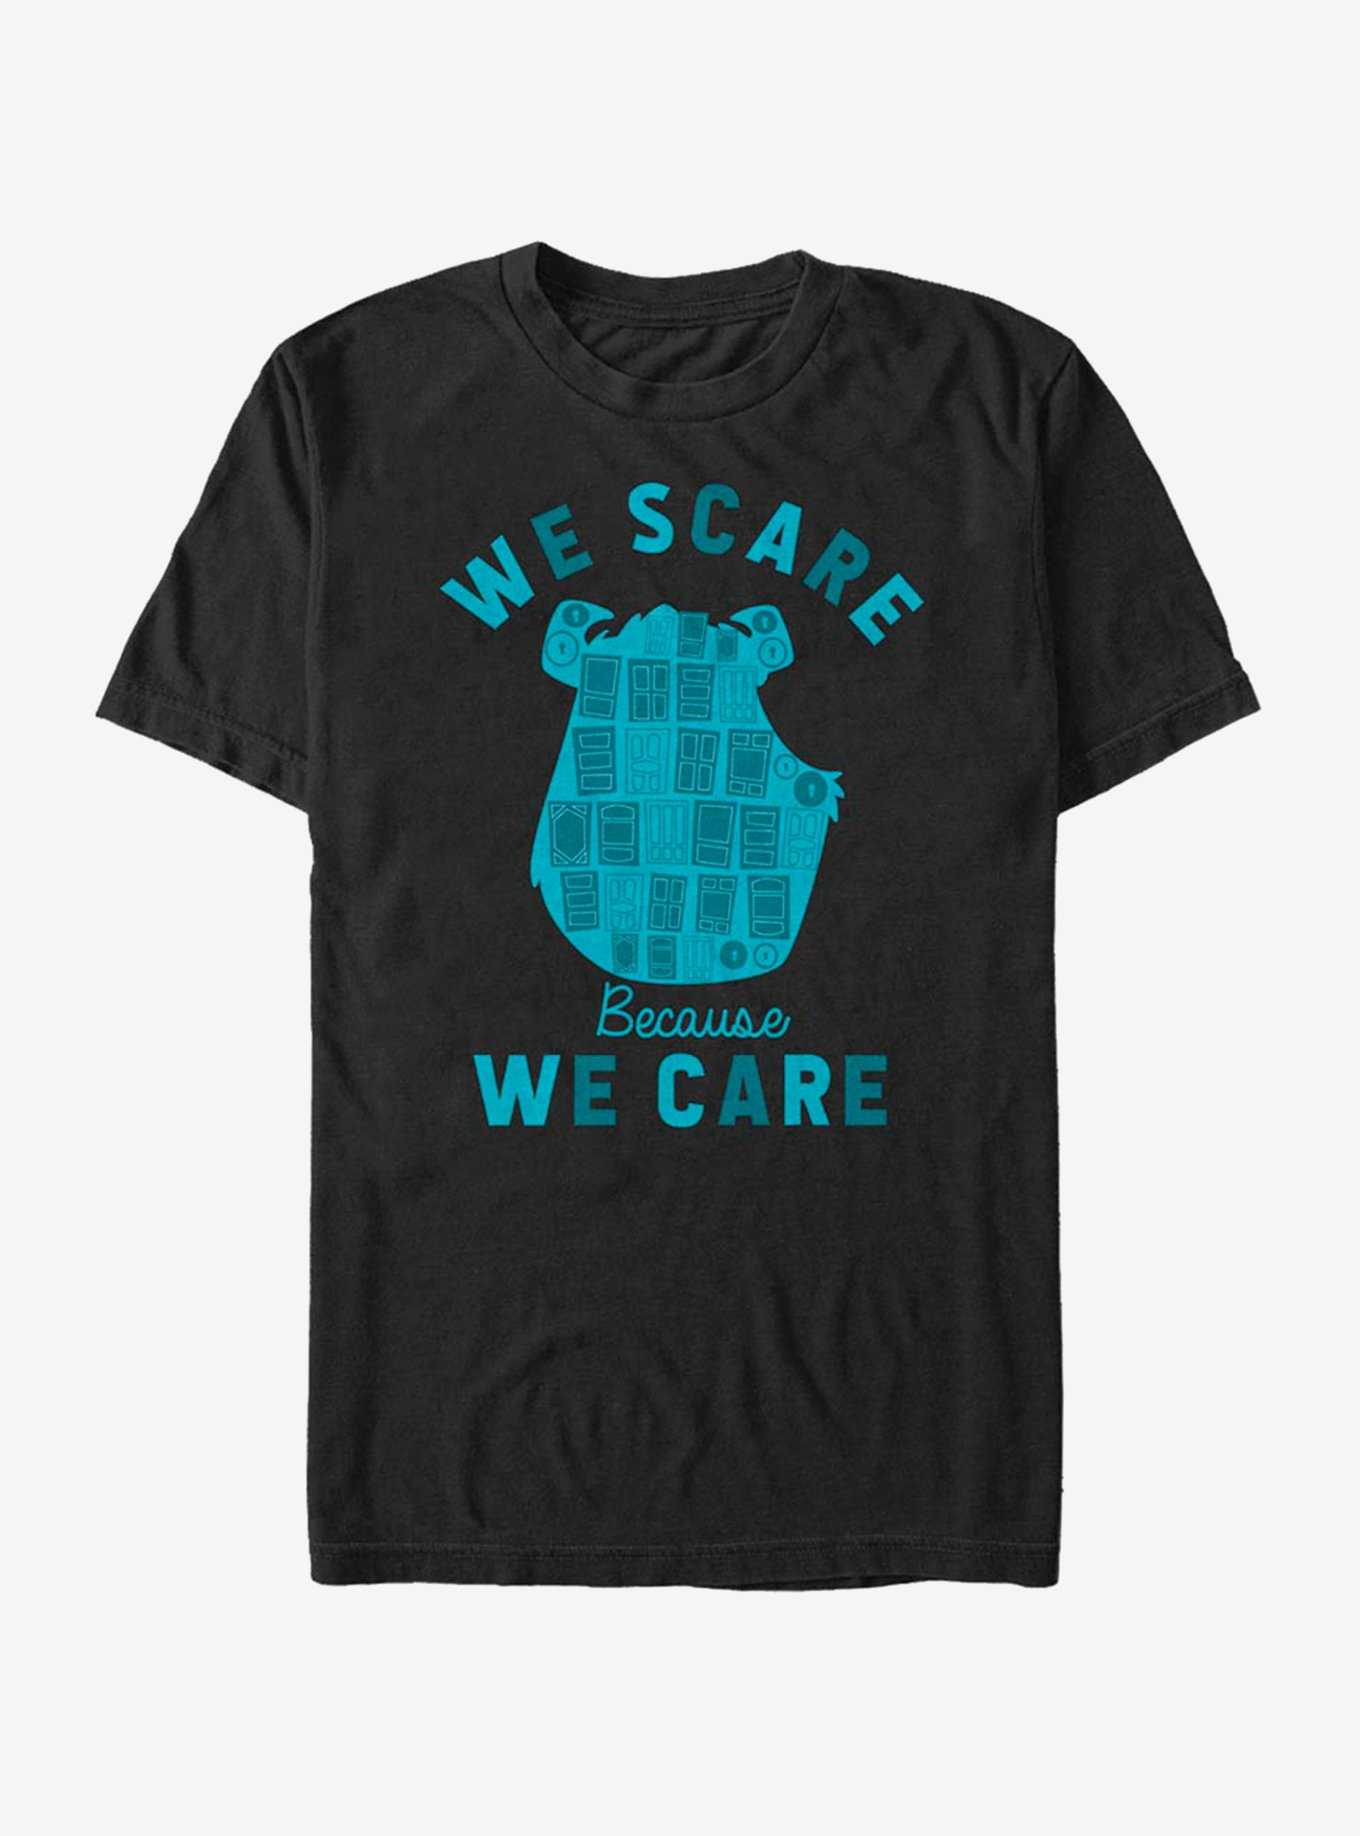 Disney Pixar Monsters University Scare For Care Sulley T-Shirt, , hi-res